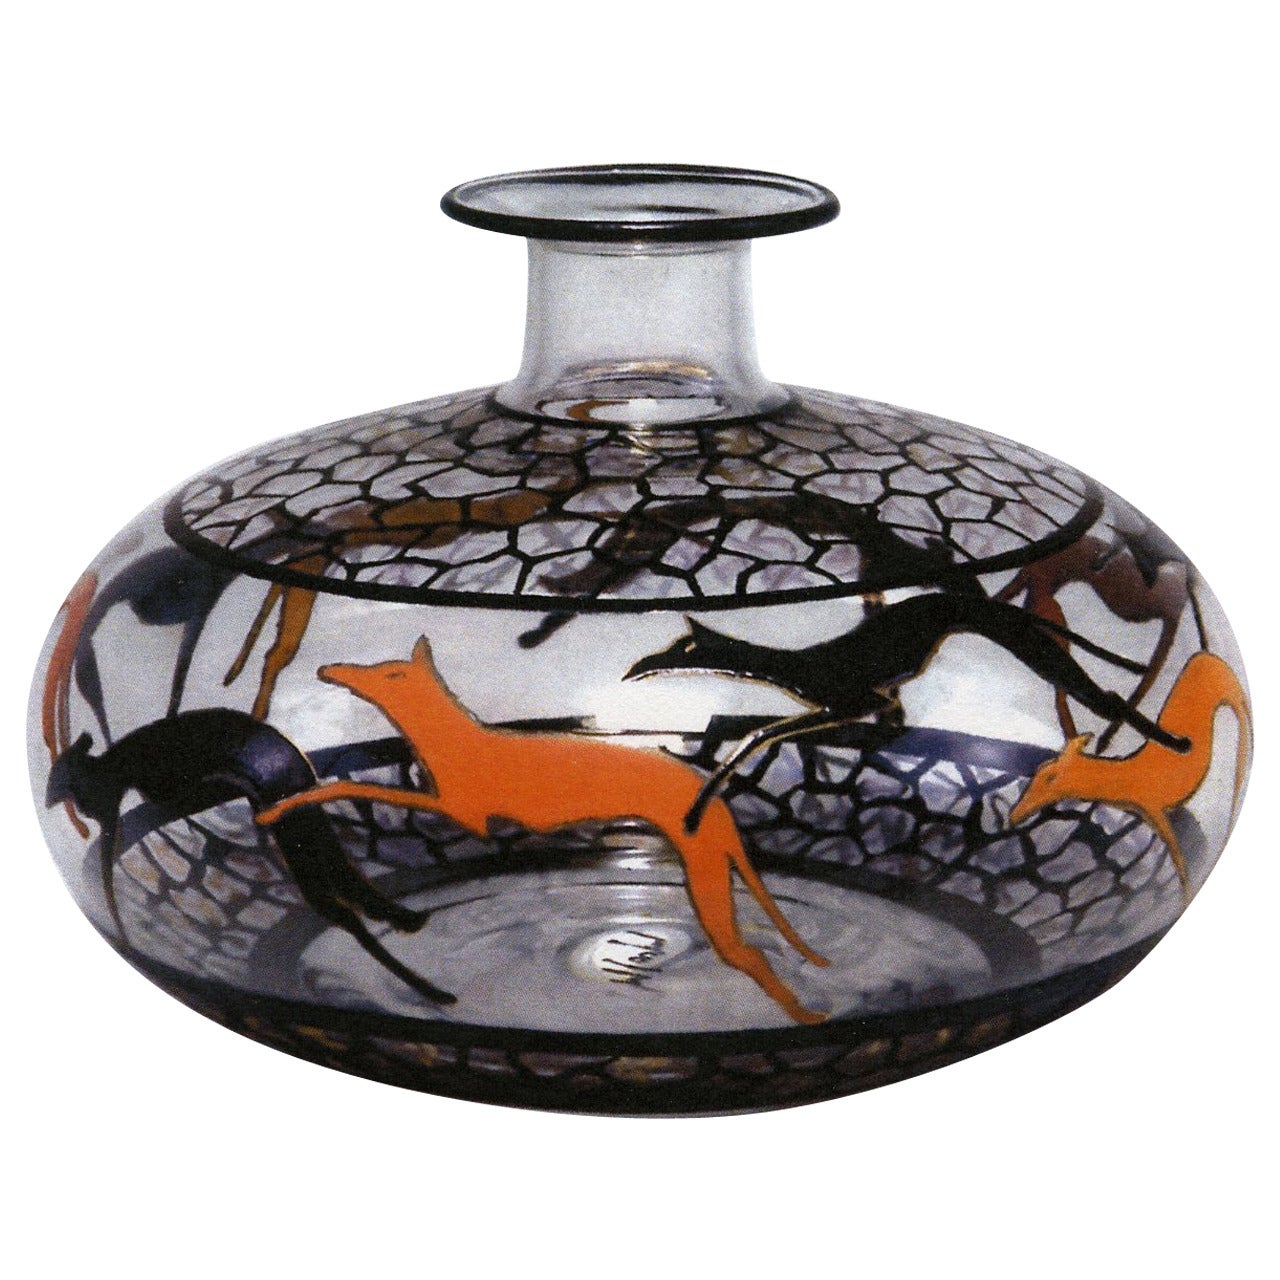 Marcel Goupy Enamelled Glass Vase, "Greyhounds Race" For Sale